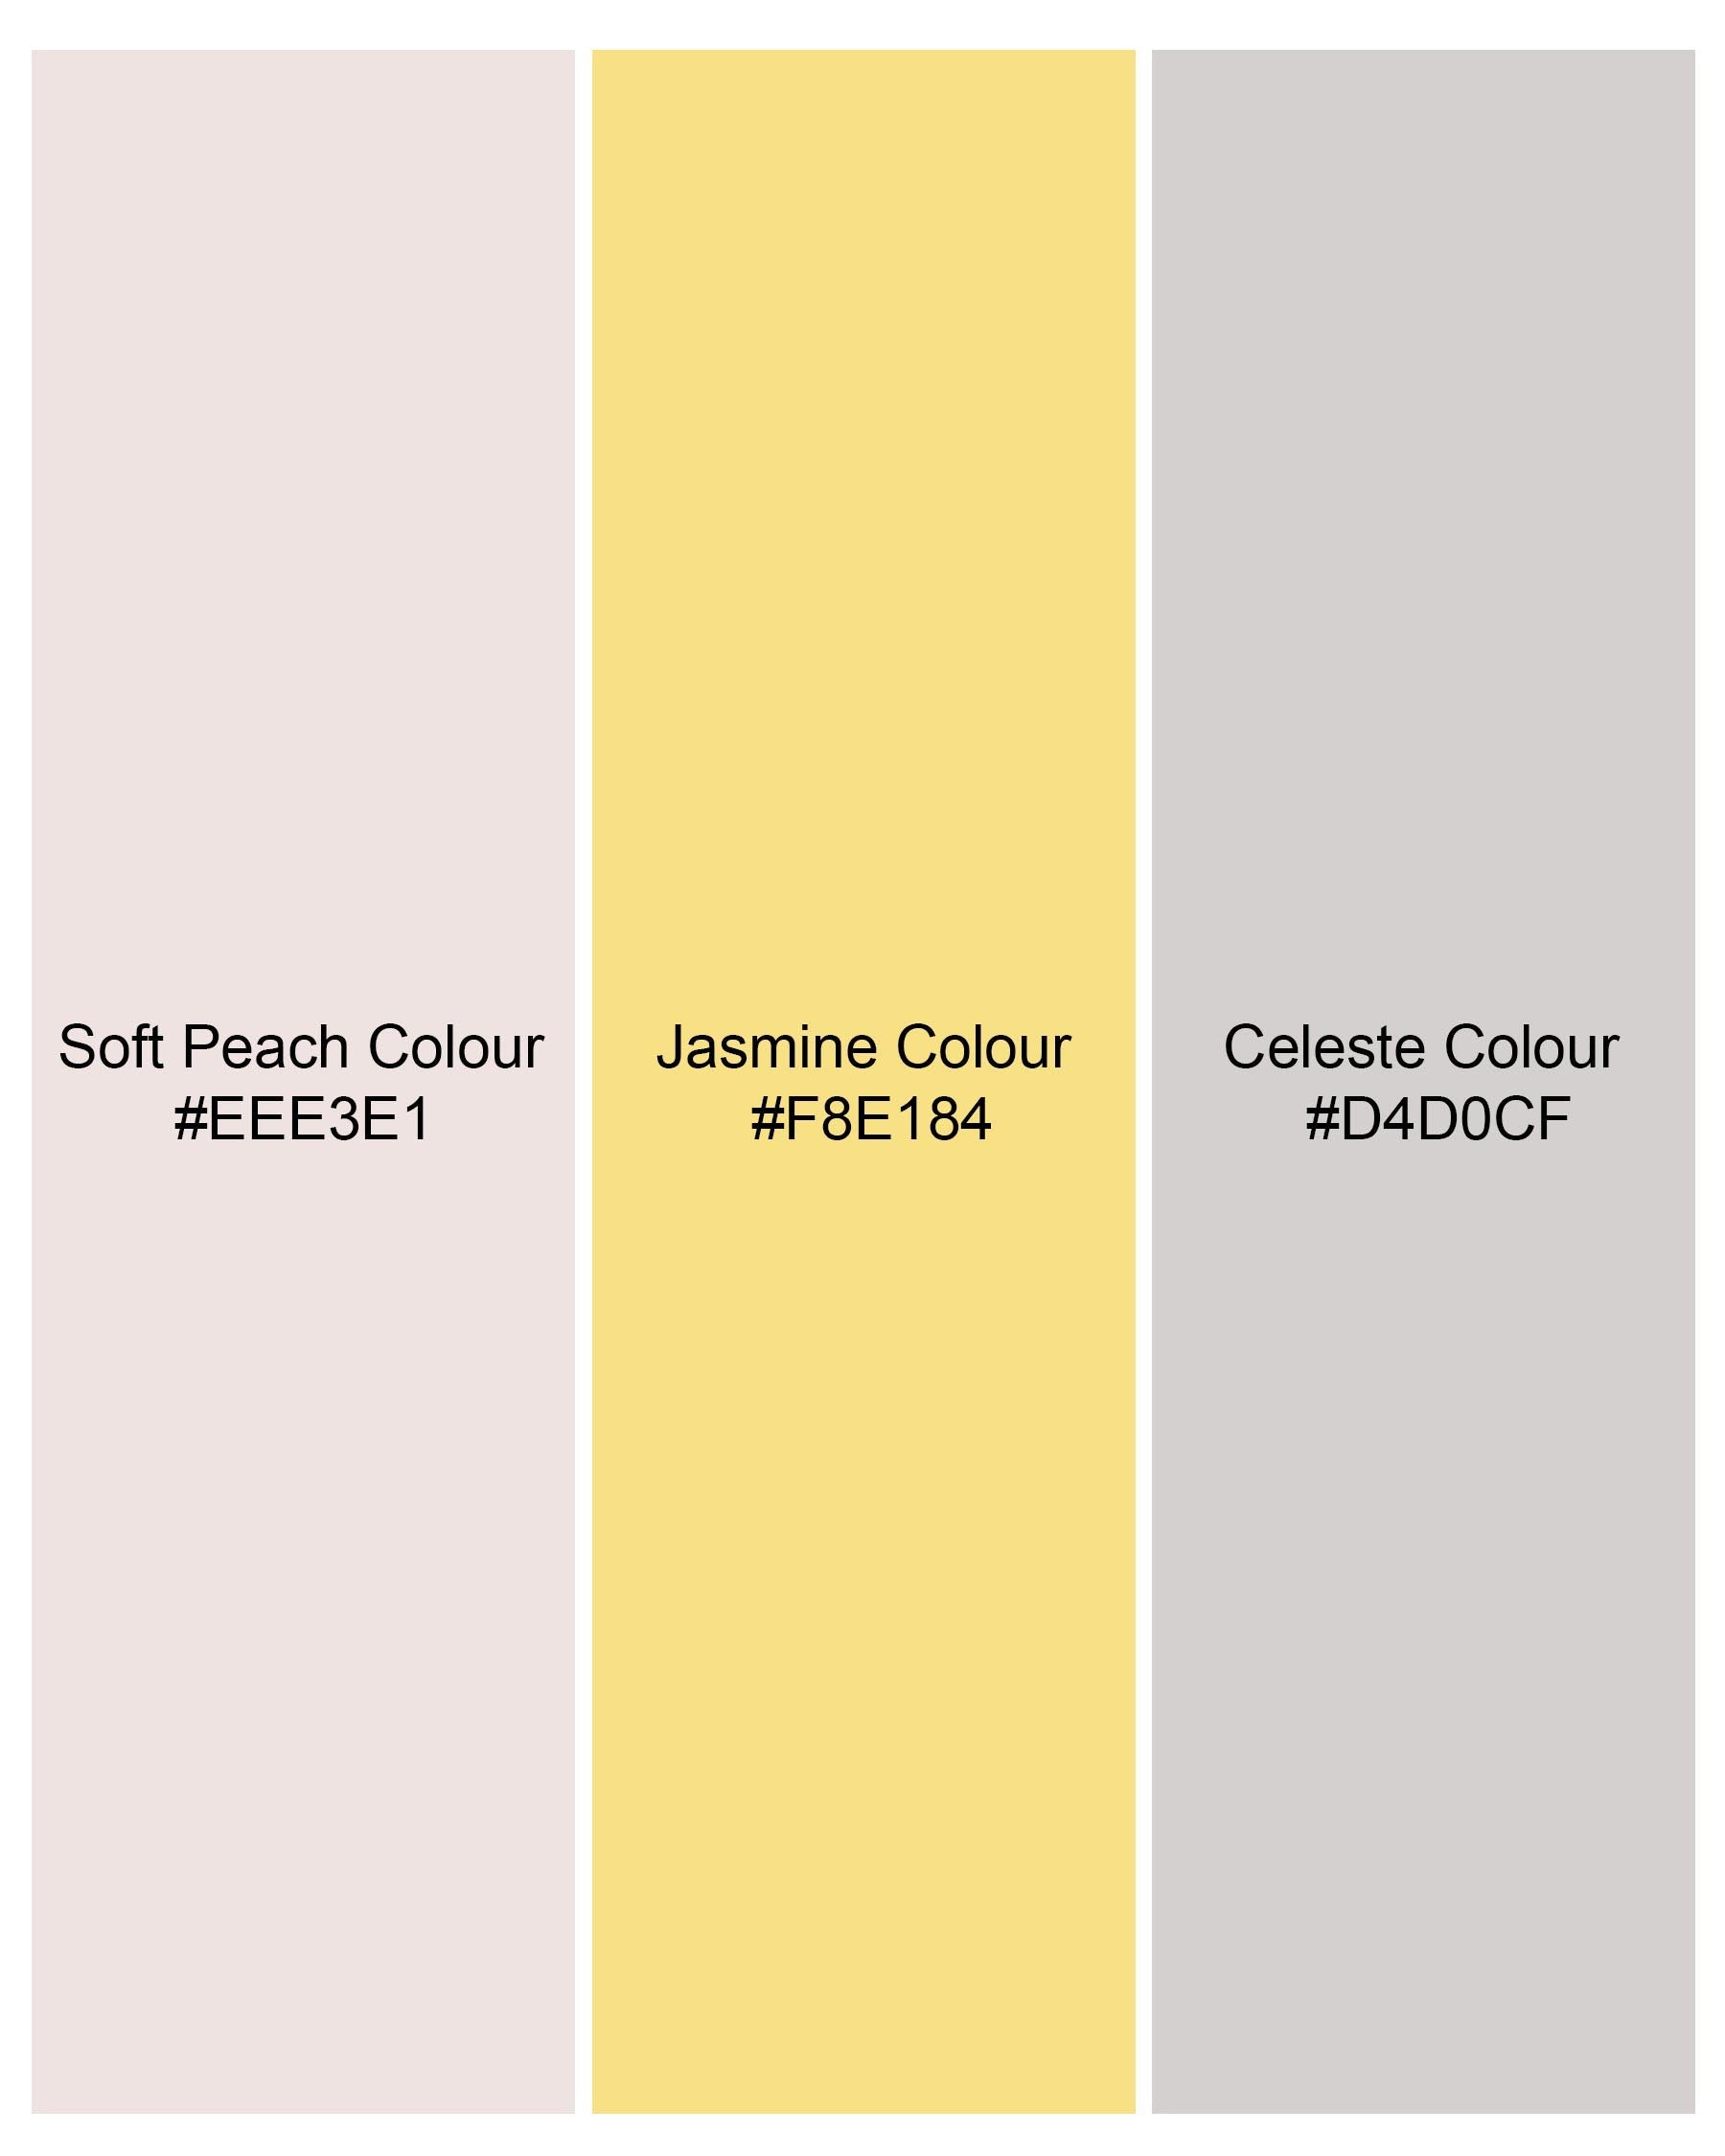 Soft Peach Pink and Jasmine Yellow Striped Luxurious Linen Shirt 8010-BD-38,8010-BD-H-38,8010-BD-39,8010-BD-H-39,8010-BD-40,8010-BD-H-40,8010-BD-42,8010-BD-H-42,8010-BD-44,8010-BD-H-44,8010-BD-46,8010-BD-H-46,8010-BD-48,8010-BD-H-48,8010-BD-50,8010-BD-H-50,8010-BD-52,8010-BD-H-52